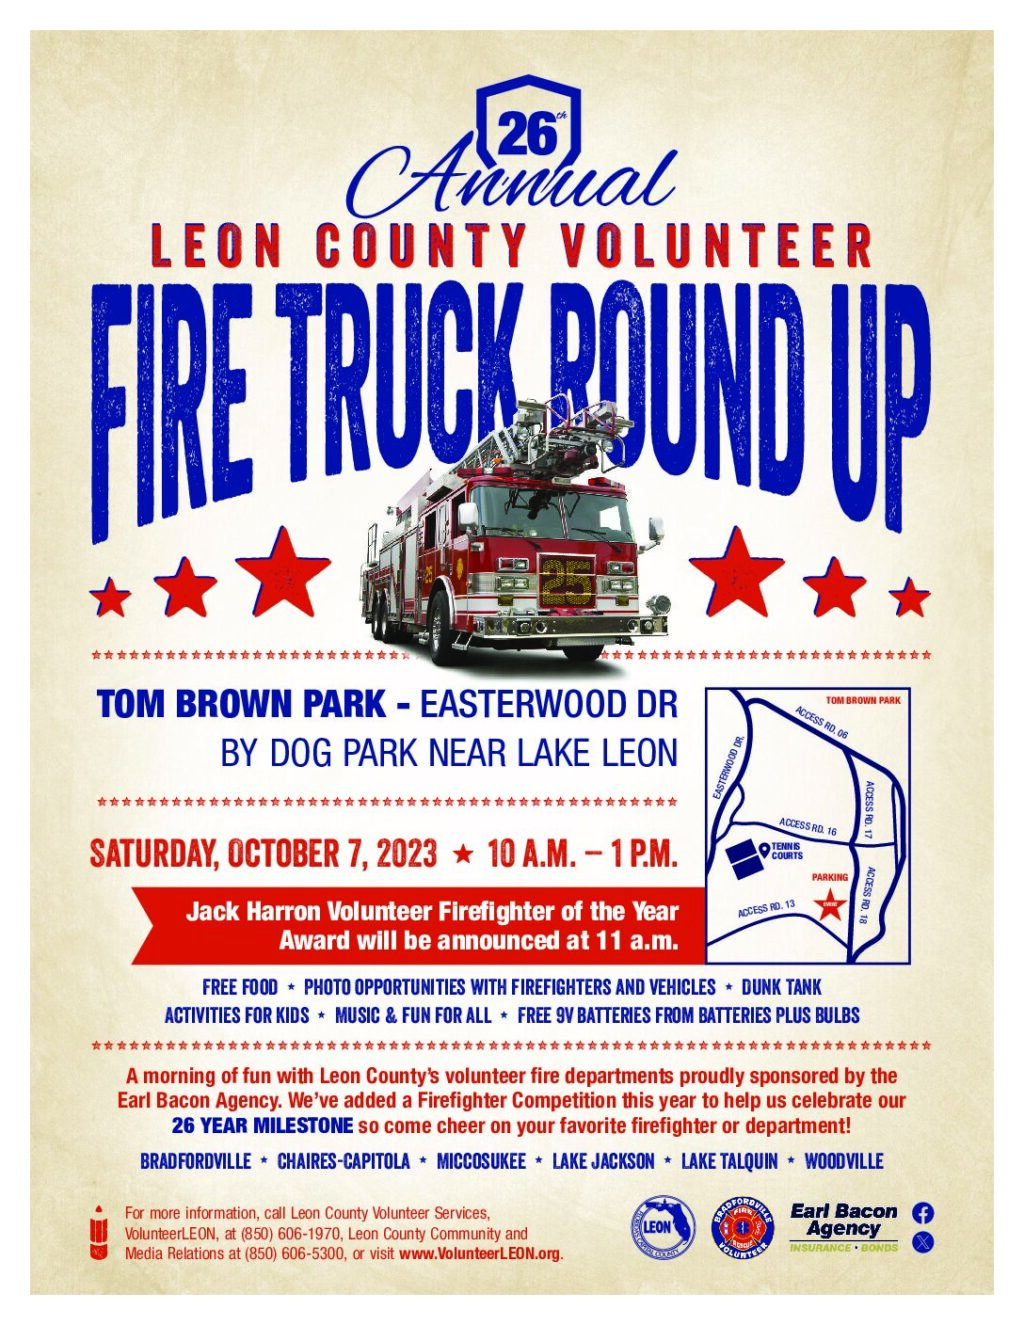 Leon County Volunteer Fire Truck Round Up